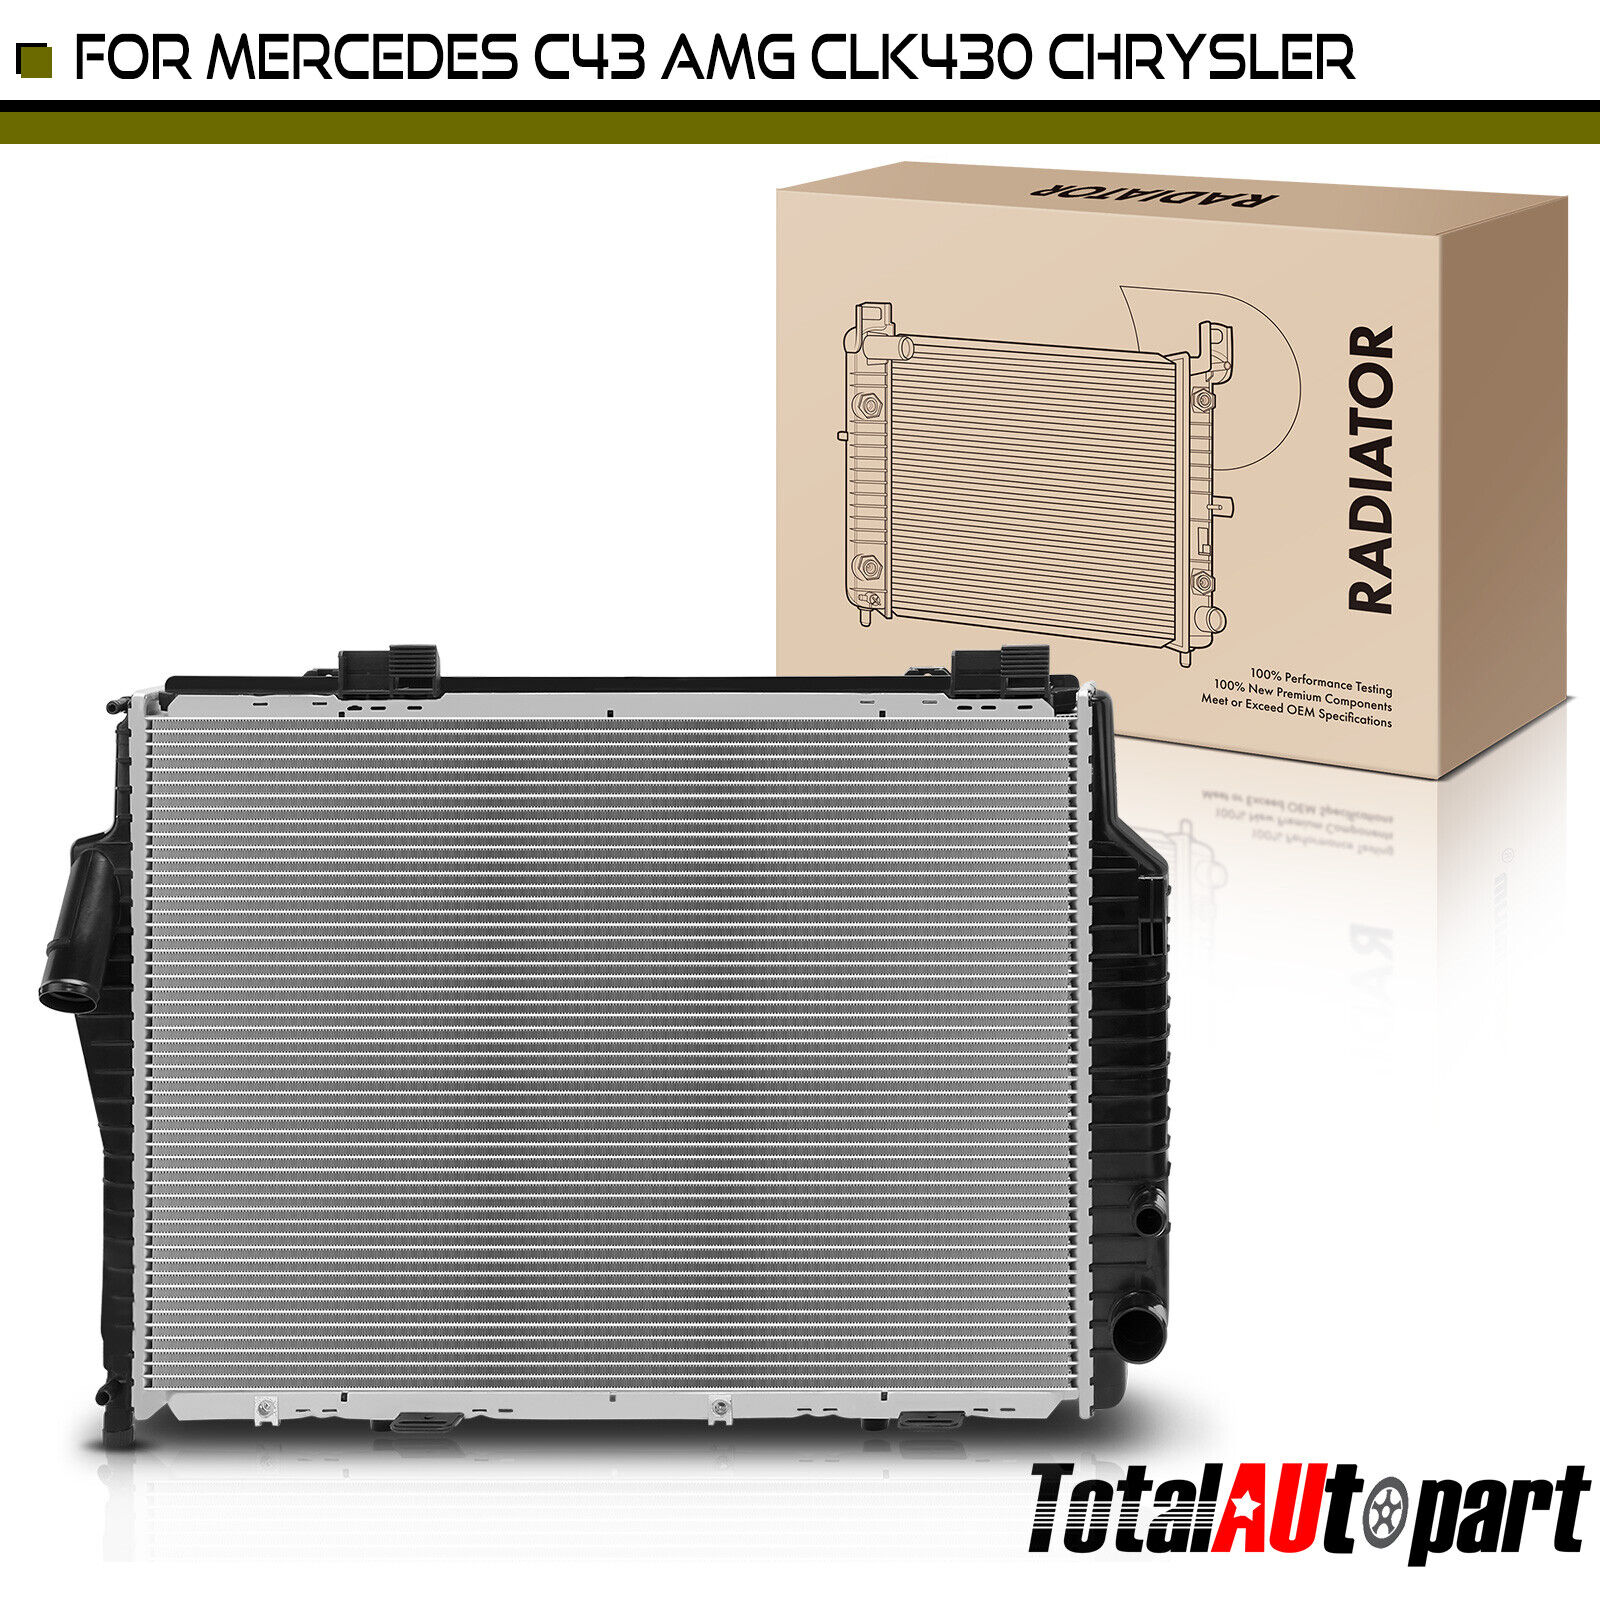 Radiator w/ Transmission Oil Cooler for Mercedes-Benz W203 CLK430 W202 Chrysler